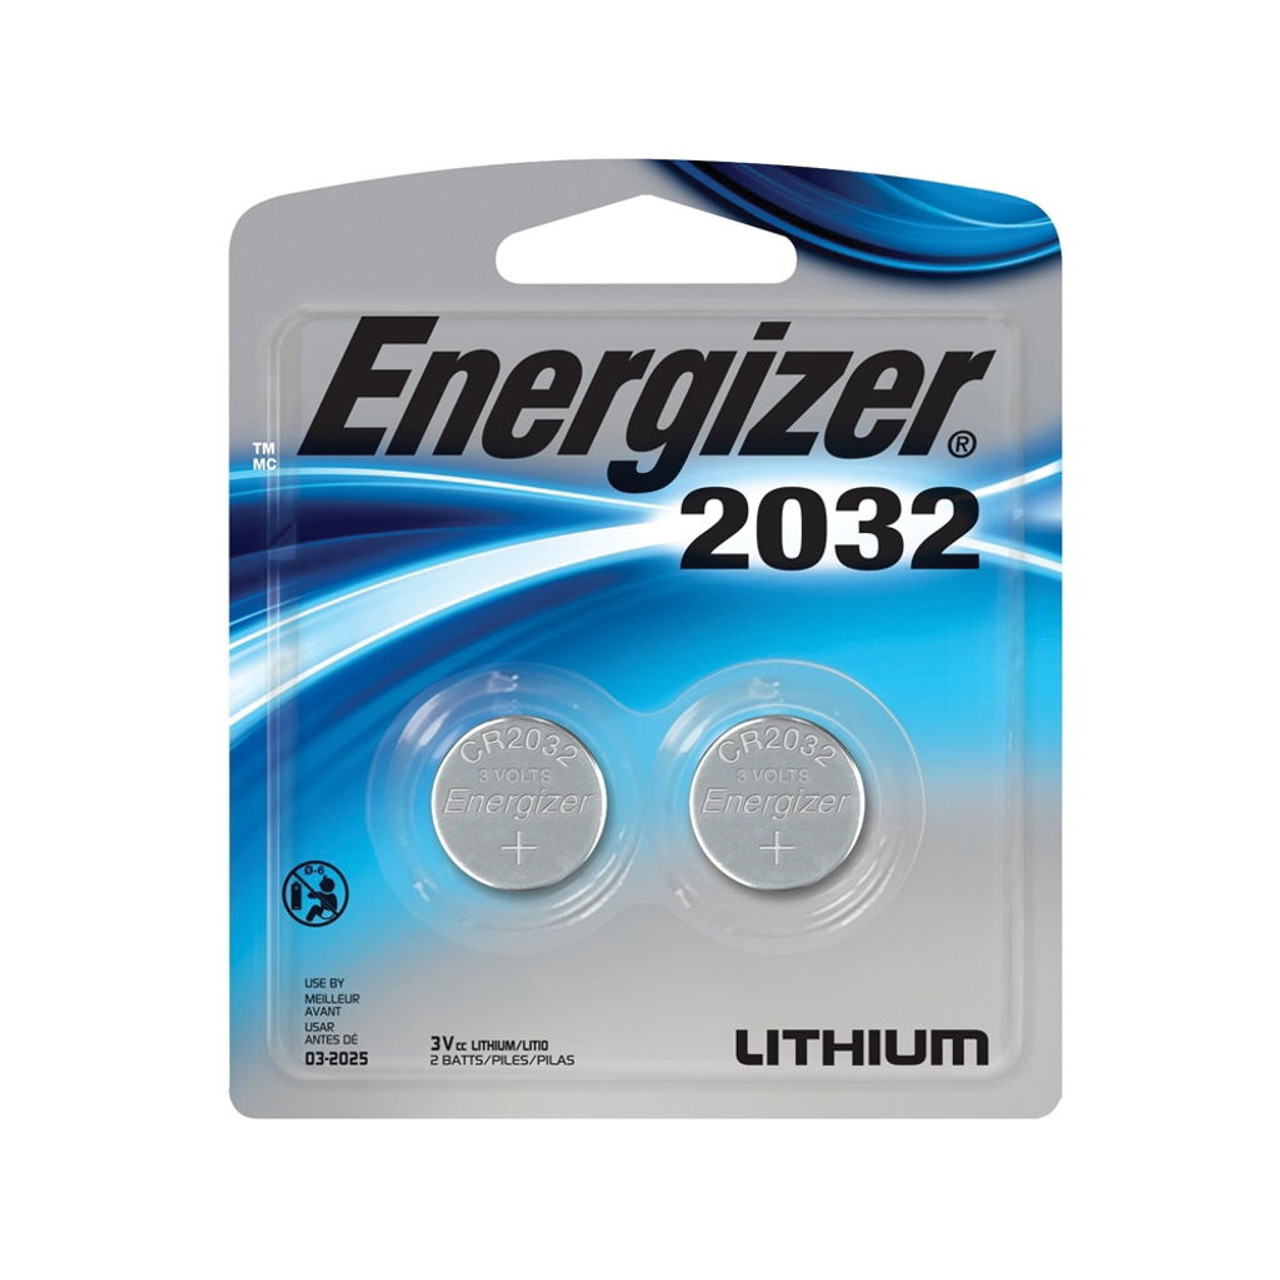 Energizer 2032 Lithium Battery - 2 Pk